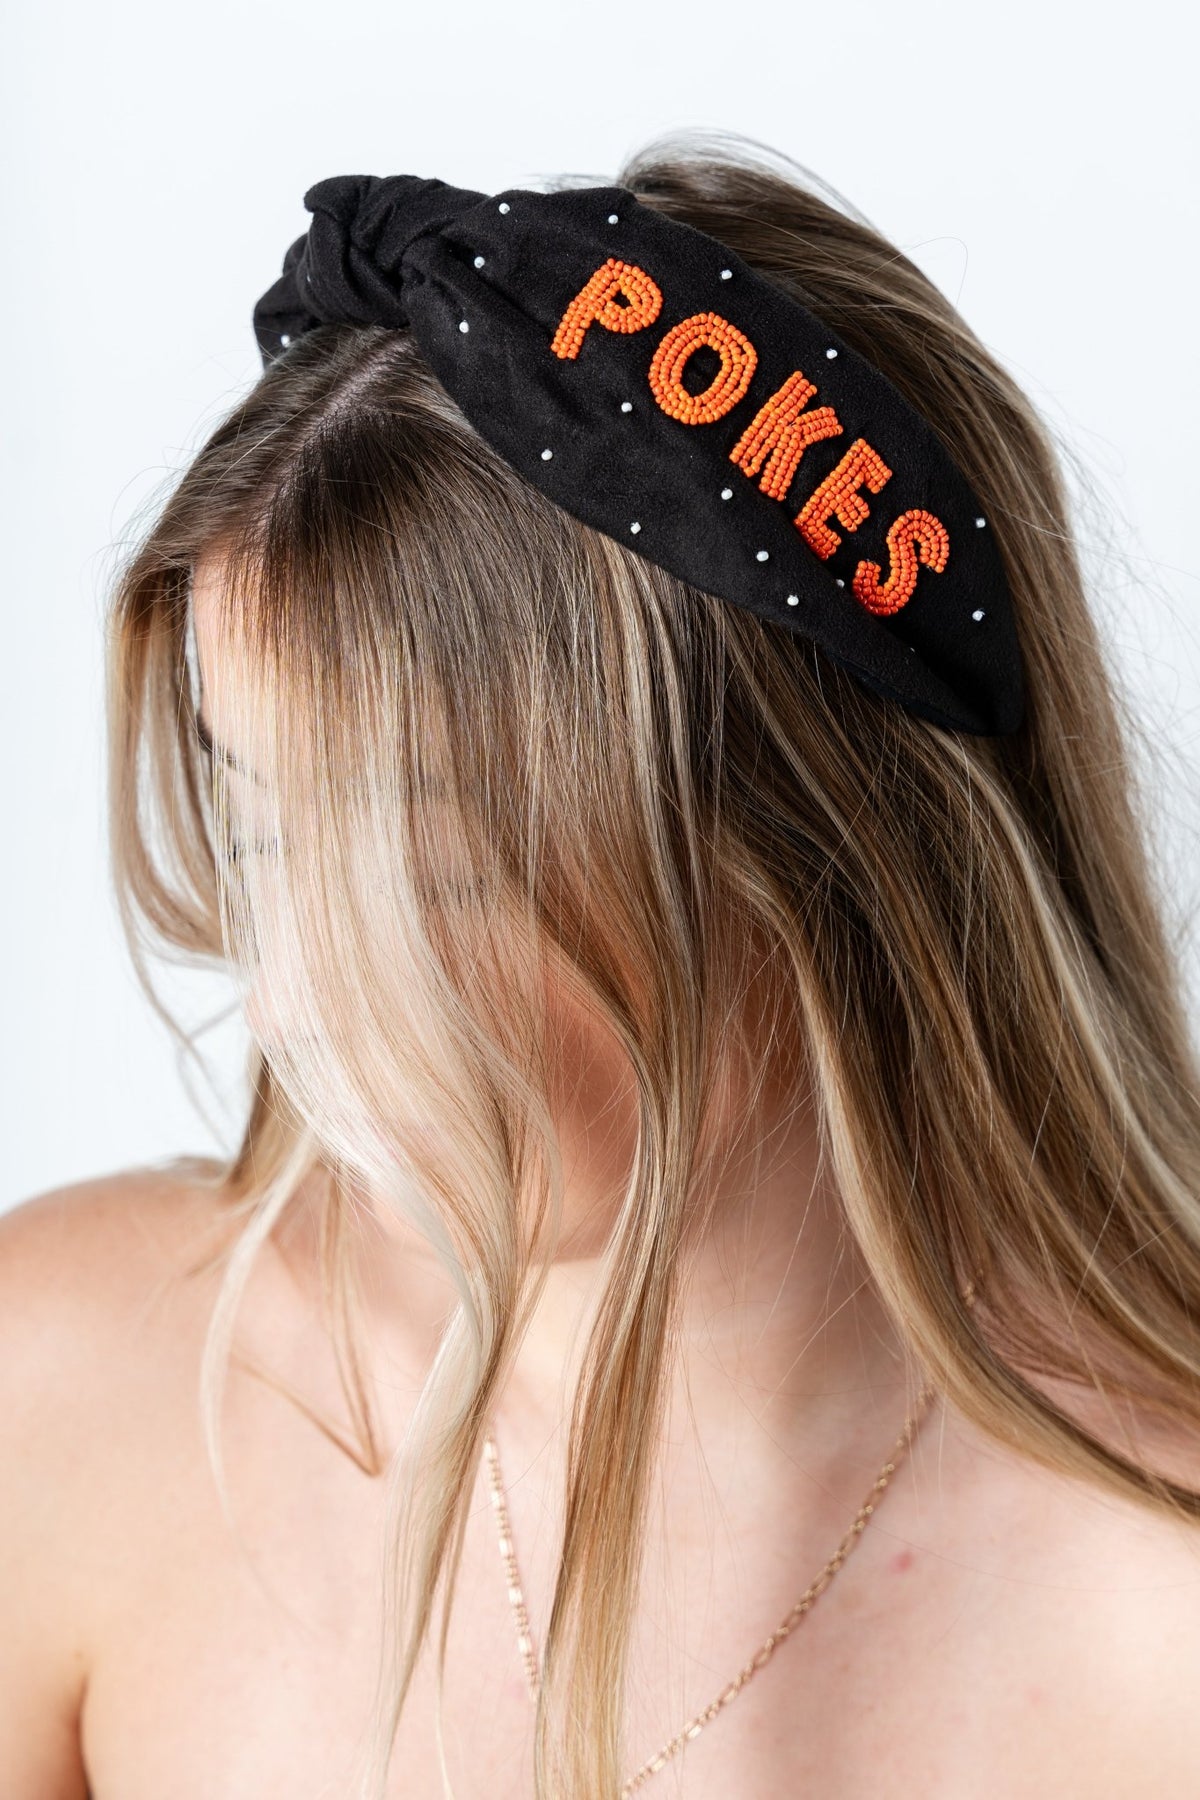 Pokes beaded headband black - Trendy Gifts at Lush Fashion Lounge Boutique in Oklahoma City